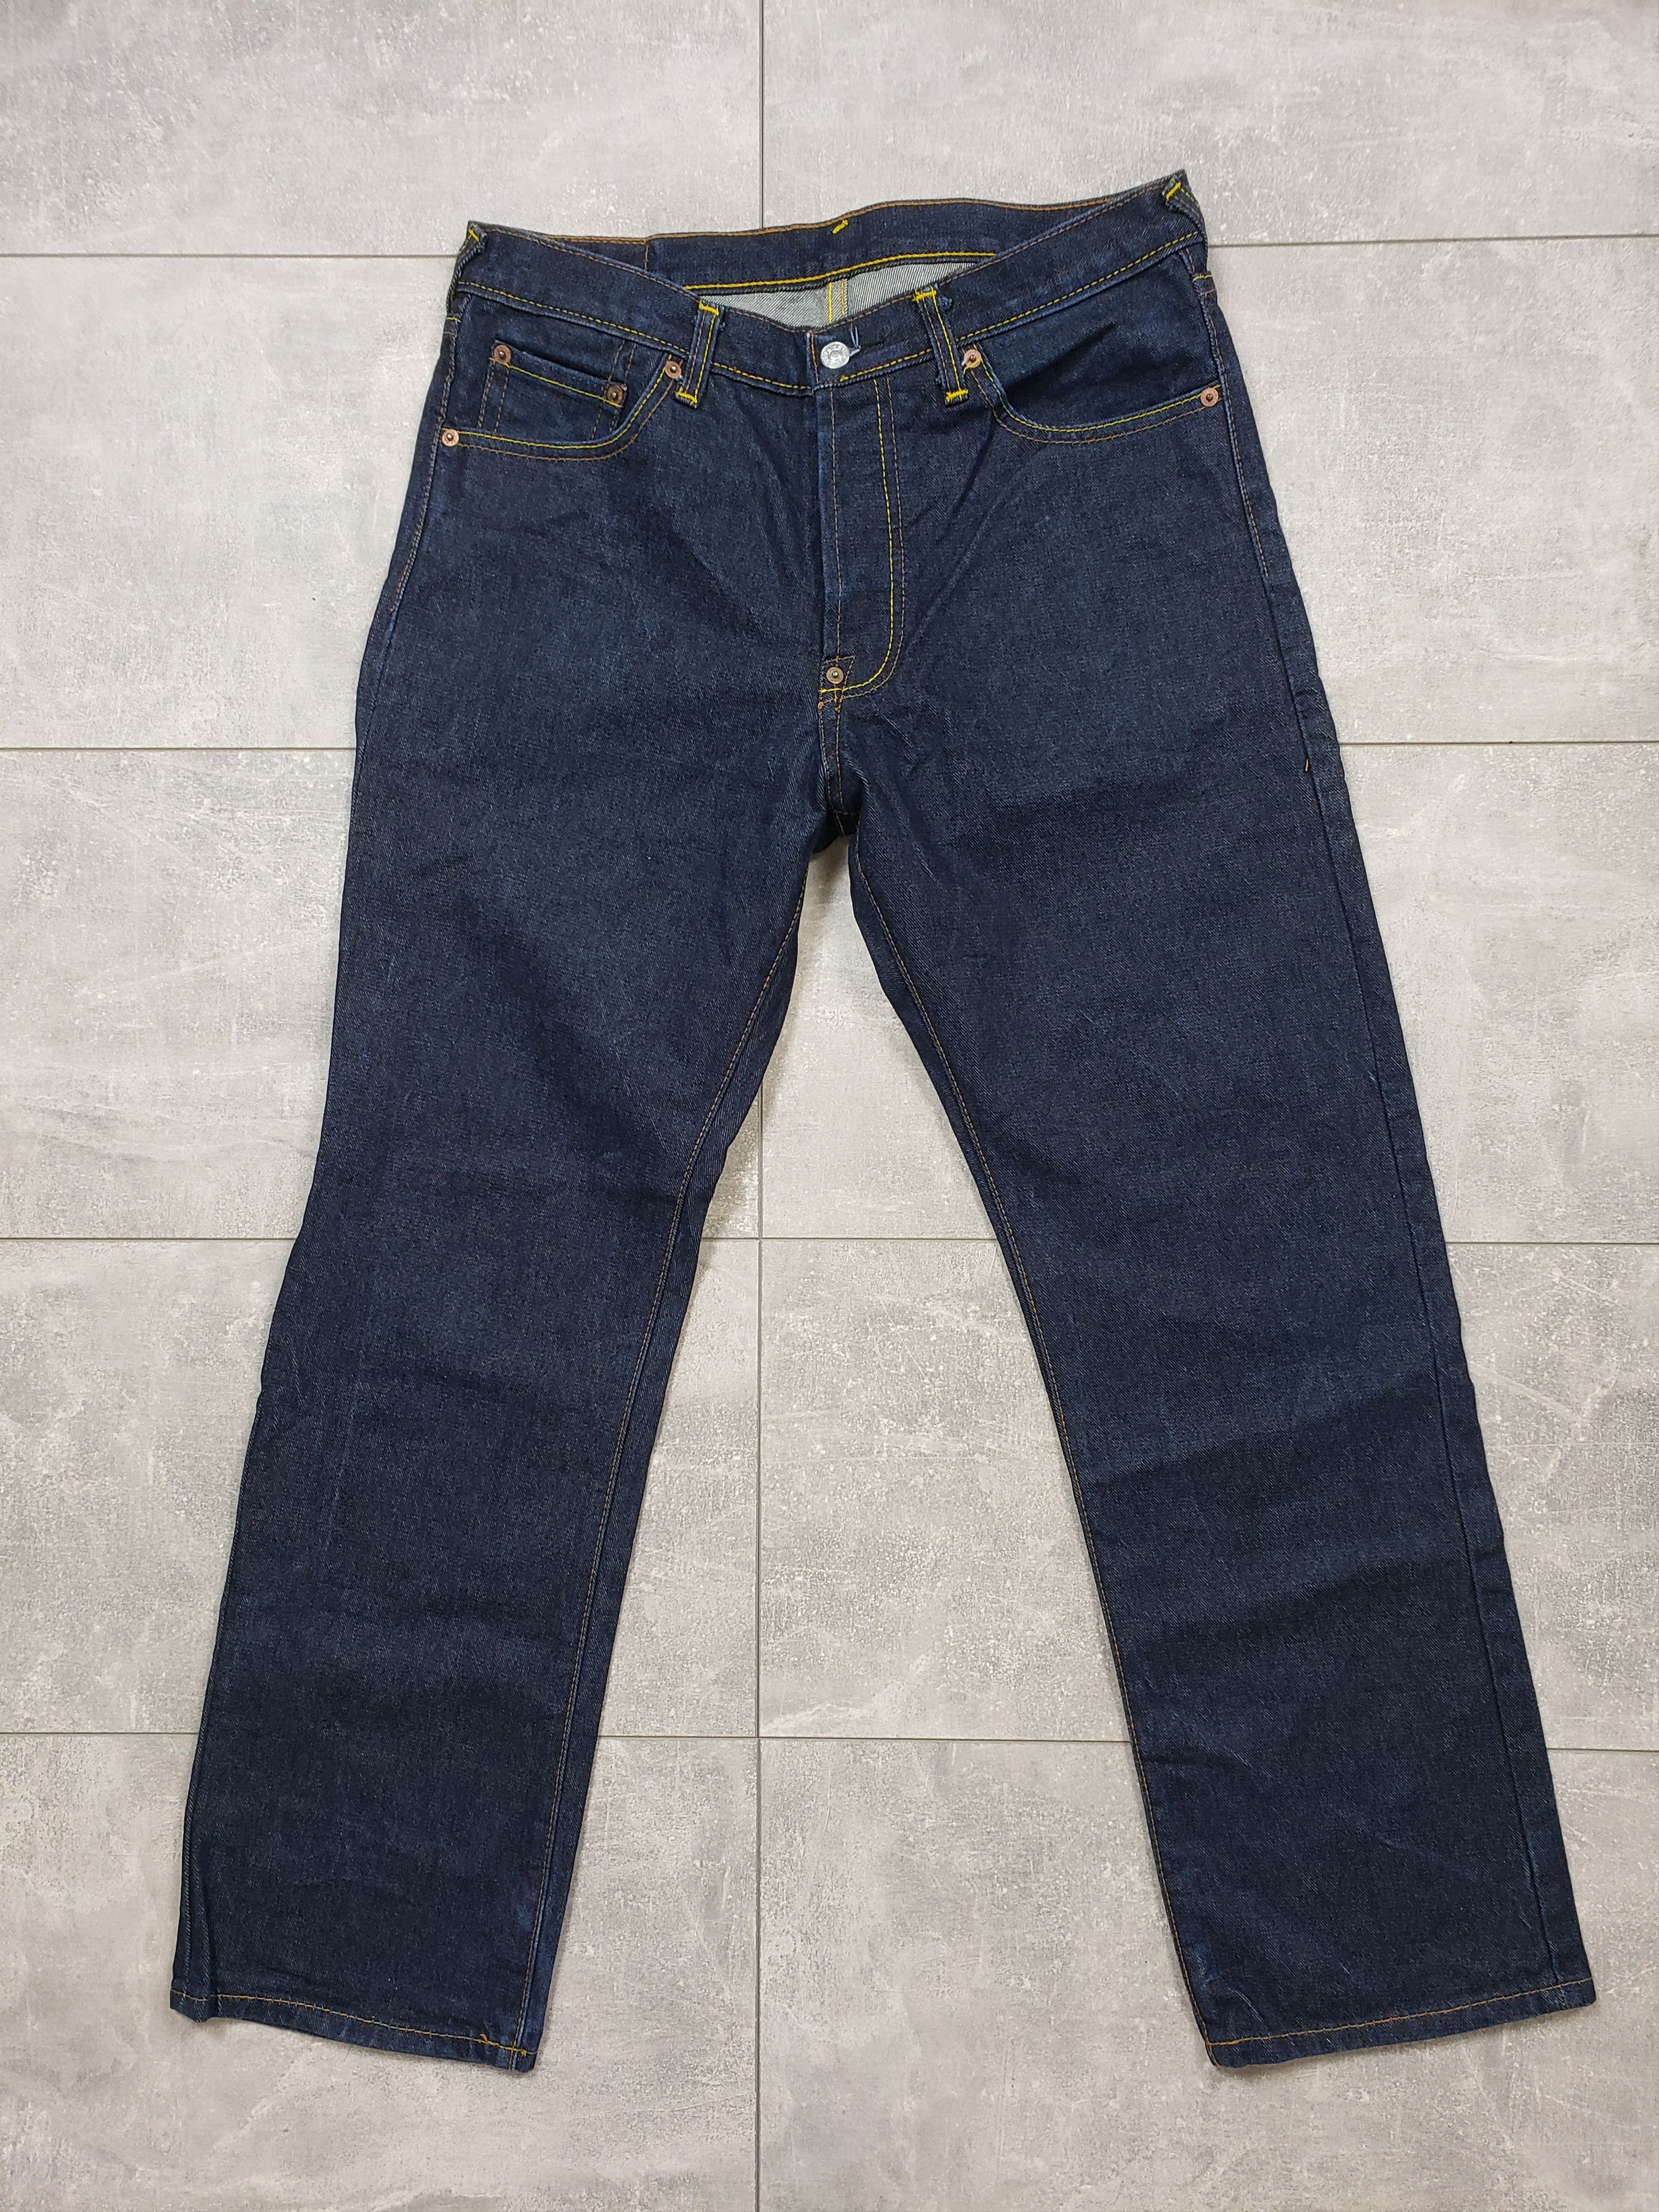 Evisu Evisu denim pants big logo jeans selvedge Size US 34 / EU 50 - 3 Thumbnail